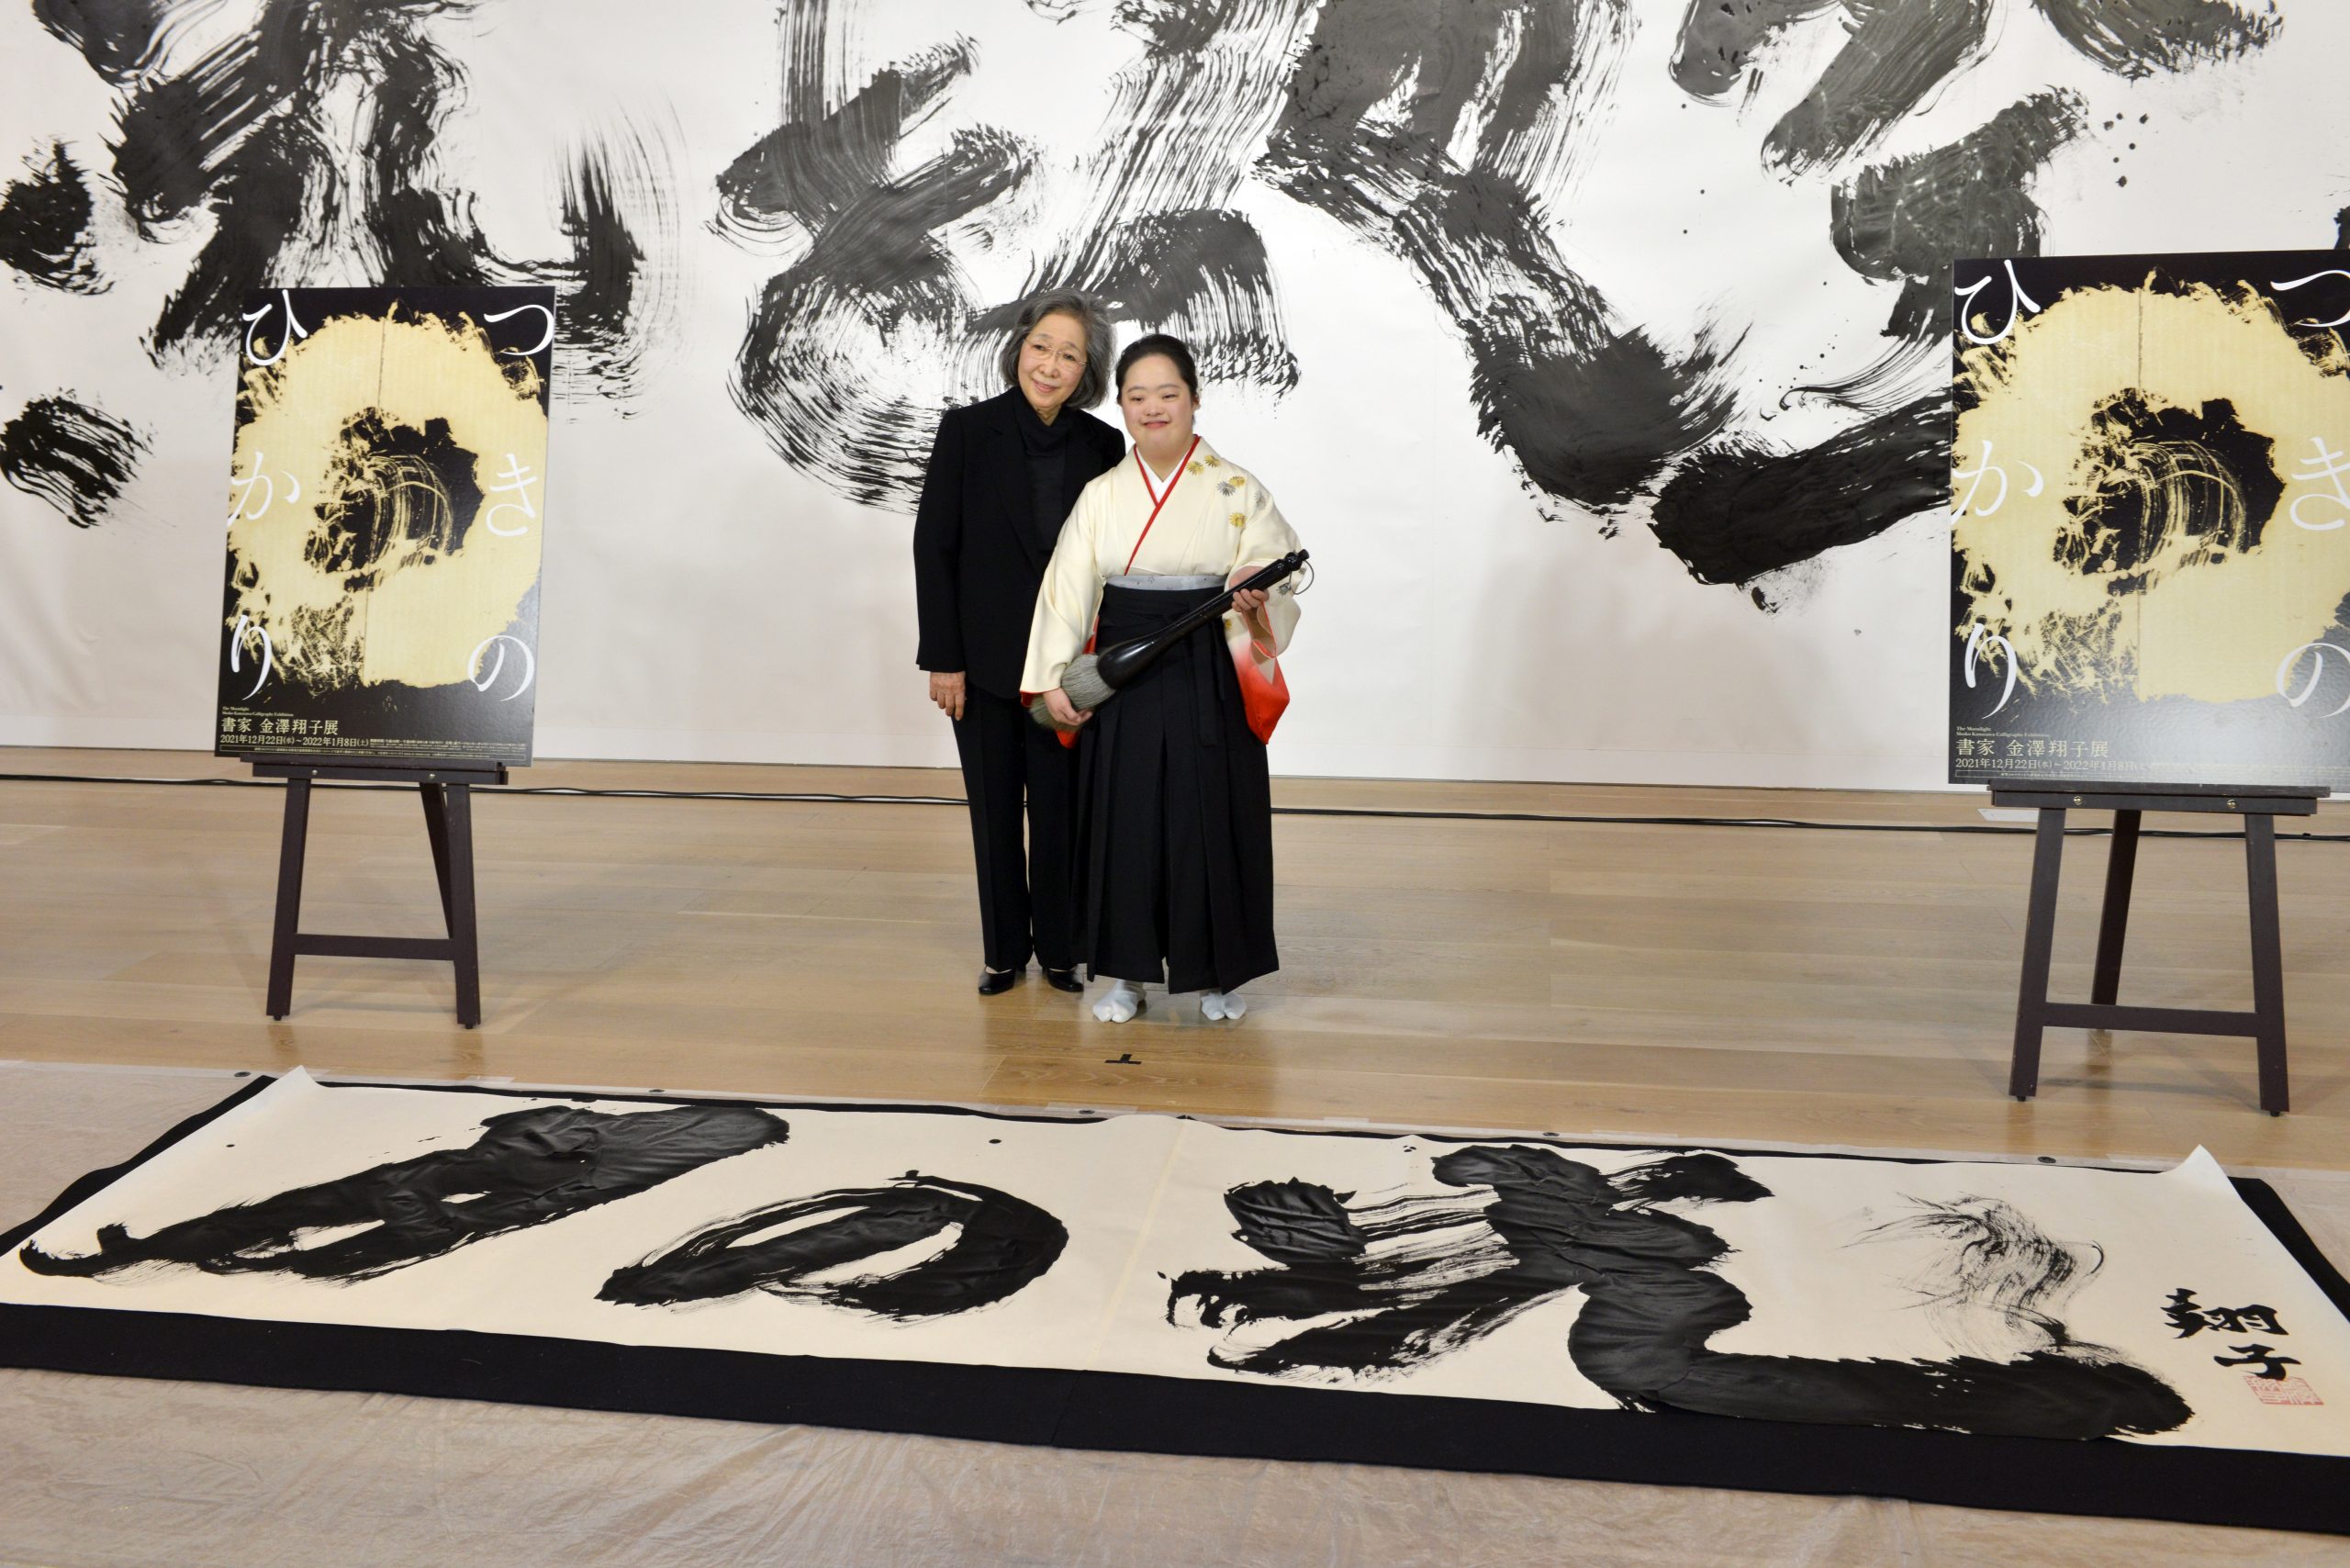 The Moonlight Shoko Kanazawa Exhibit at Mori Arts Center Gallery